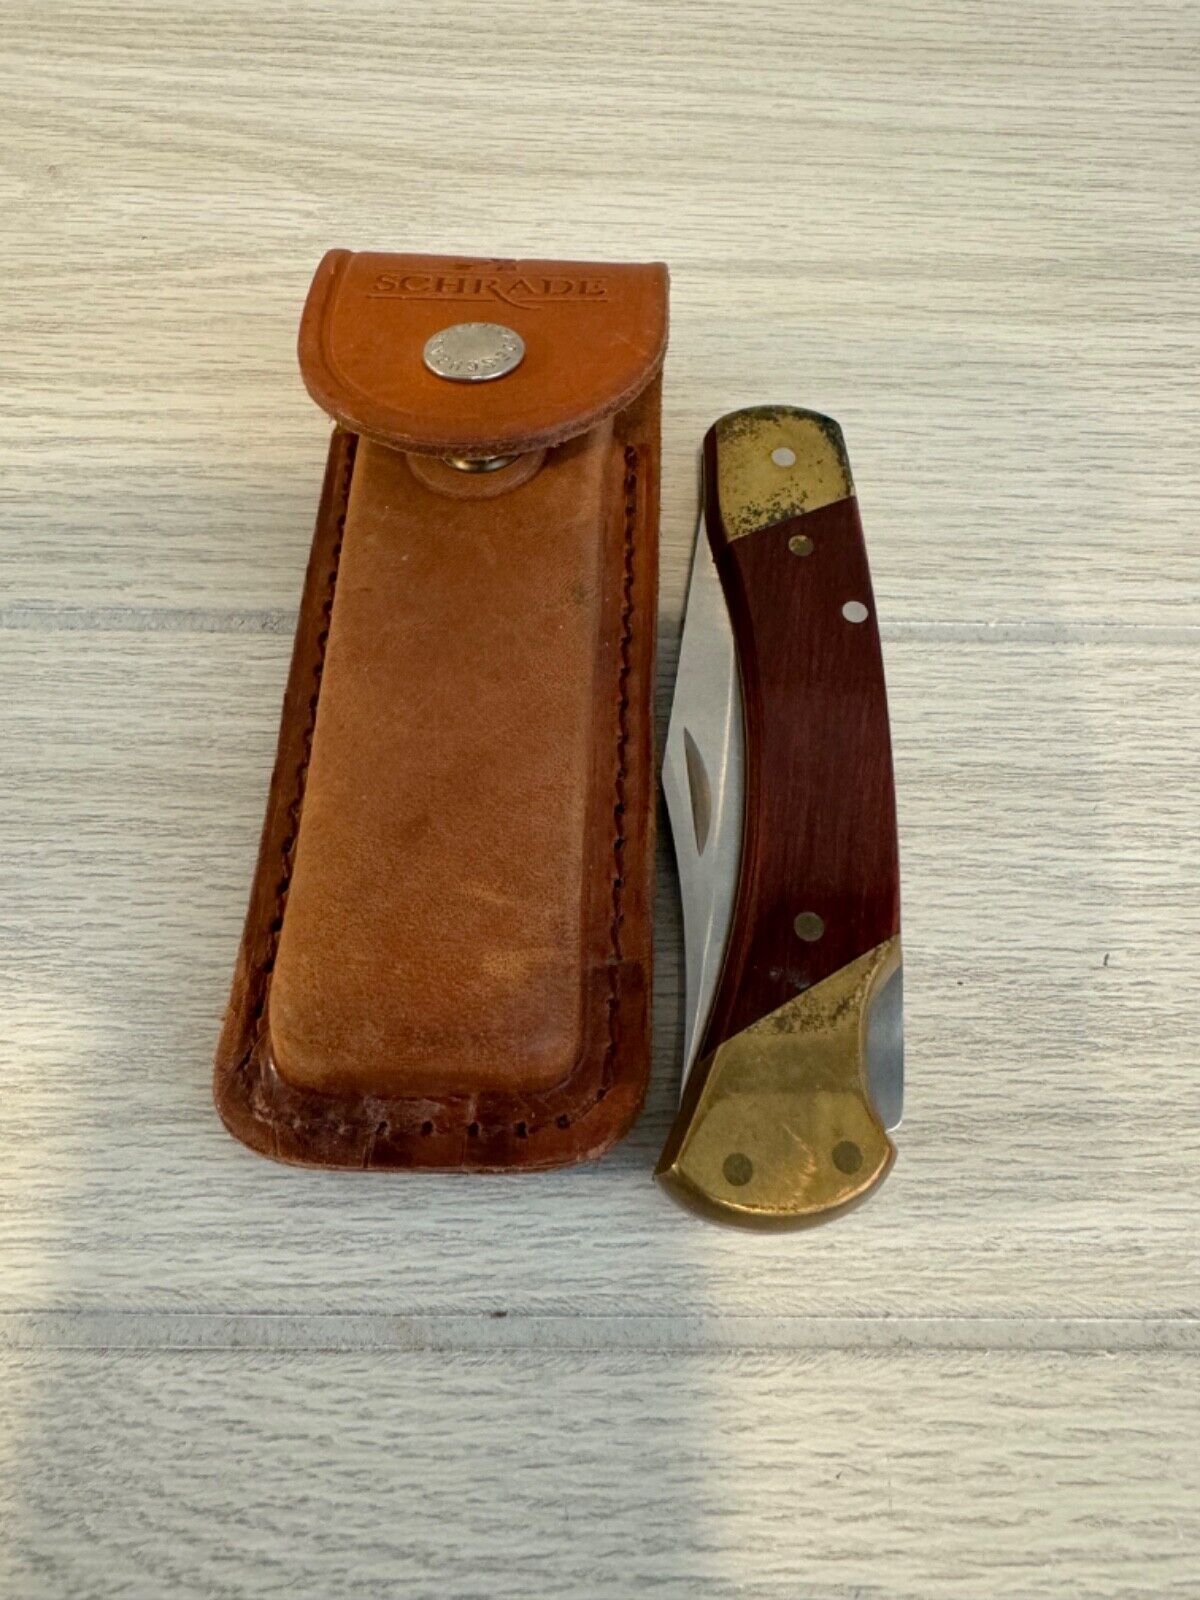 GOOD SHAPE Vintage Schrade + Uncle Henry LB7 Folding Knife with Sheath FAST SHIP